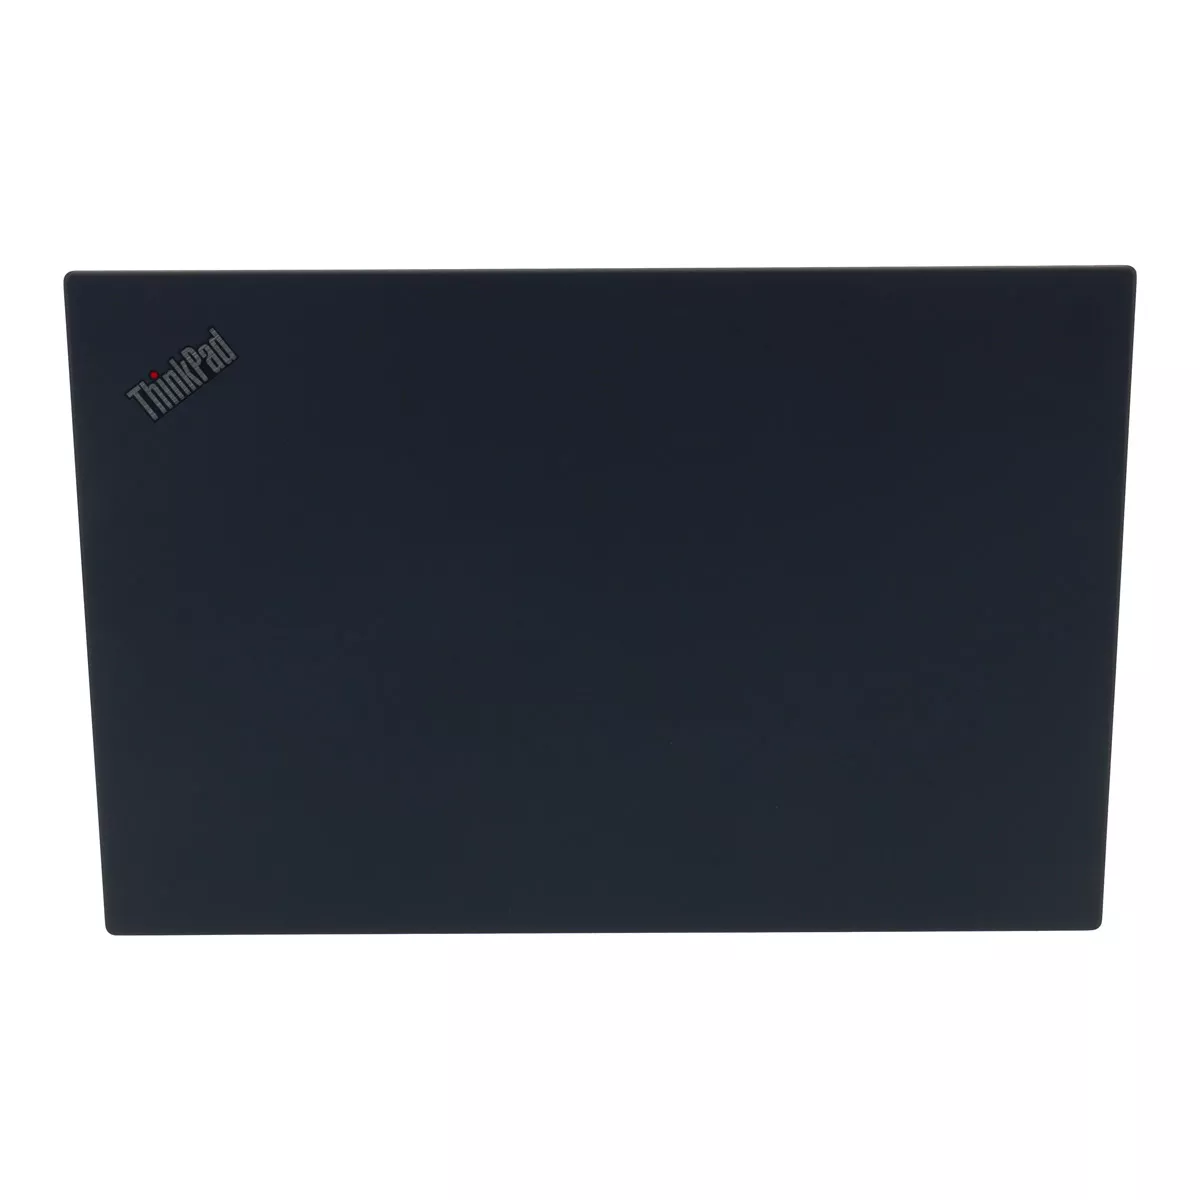 Lenovo ThinkPad T590 Core i7 8665U Full-HD Touch 16 GB 500 GB M.2 nVME SSD Webcam B